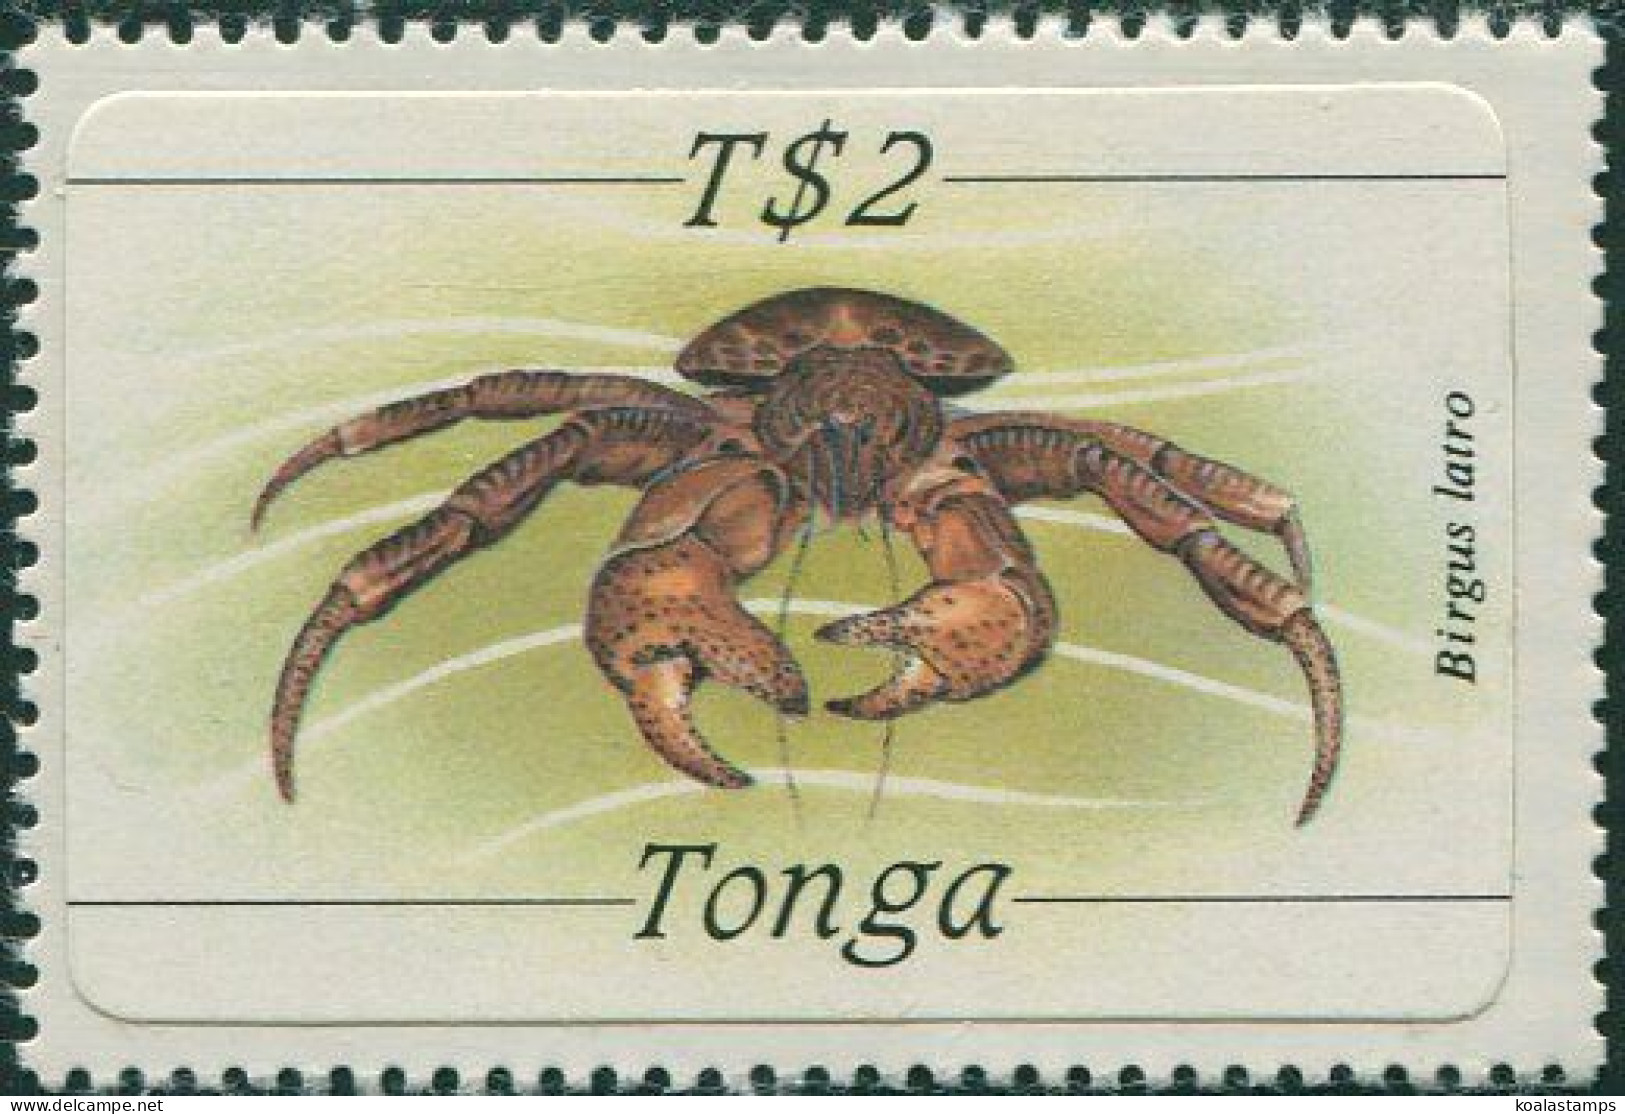 Tonga 1984 SG879 $2 Crab MNH - Tonga (1970-...)